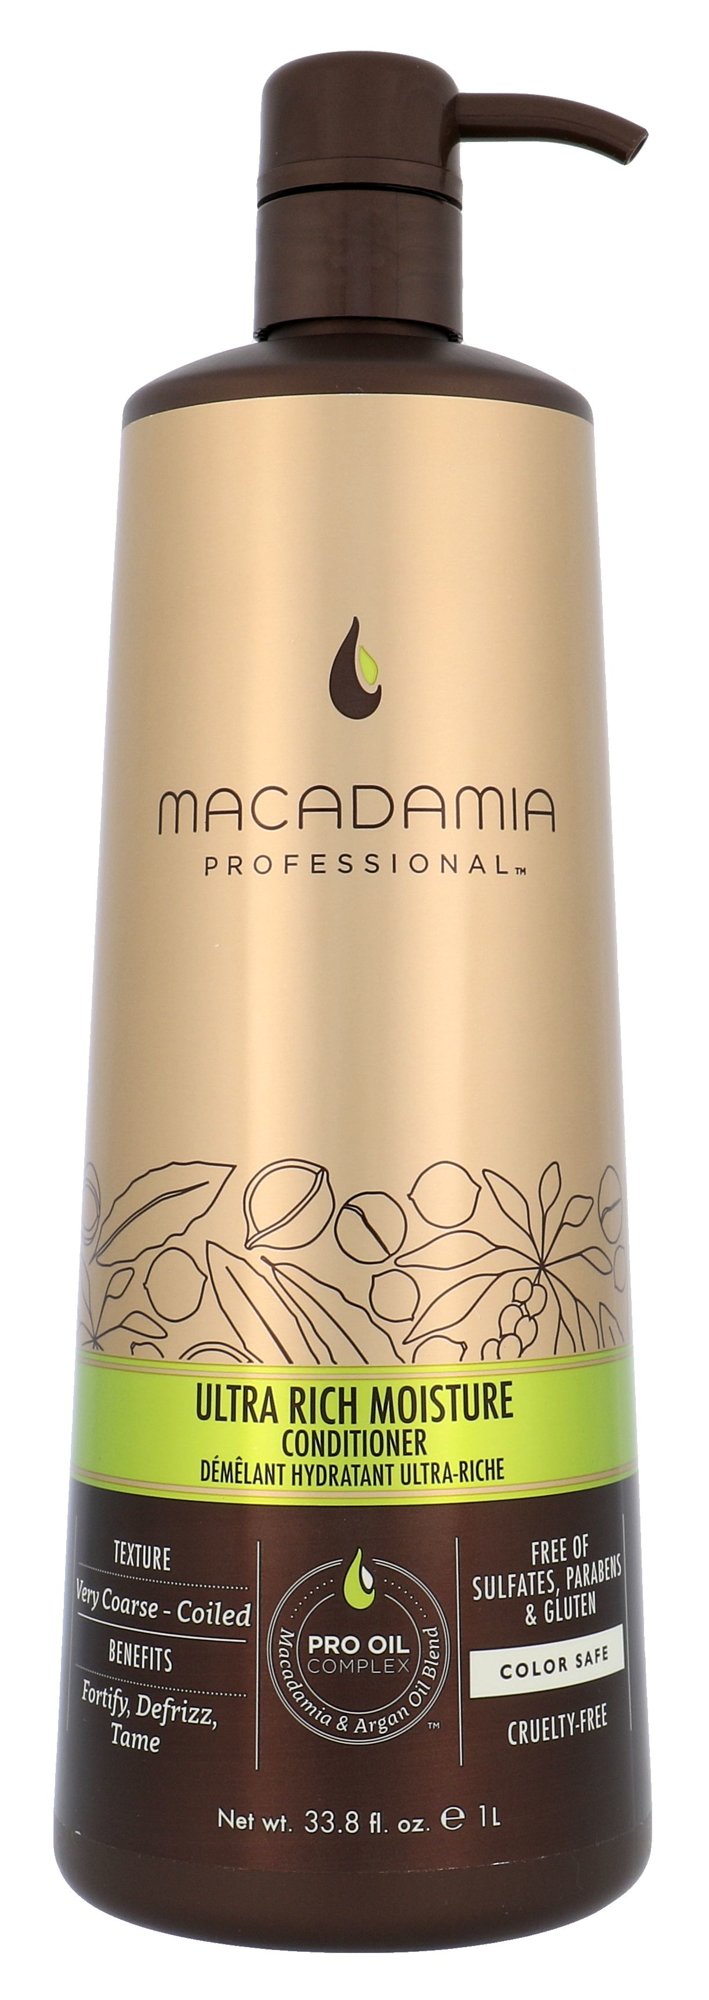 Macadamia Professional Ultra Rich Moisture 1000ml kondicionierius